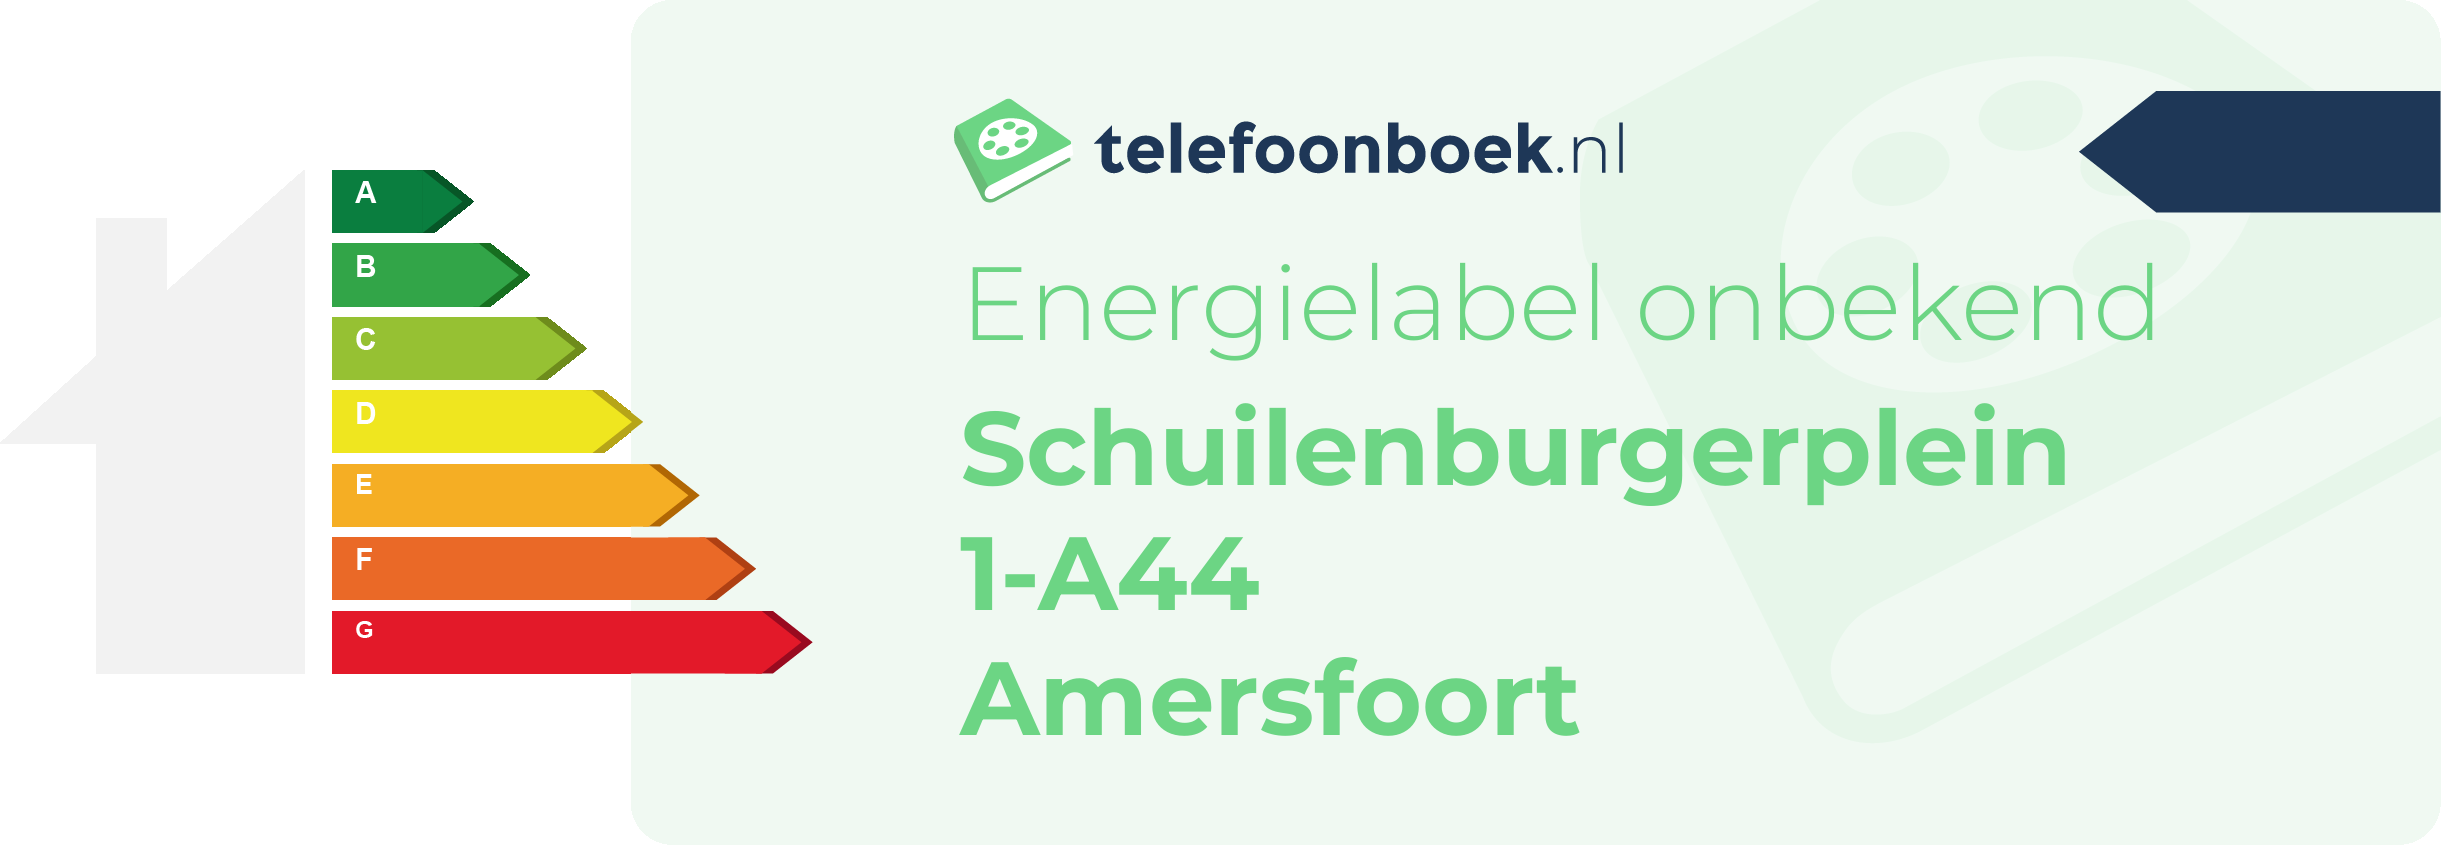 Energielabel Schuilenburgerplein 1-A44 Amersfoort